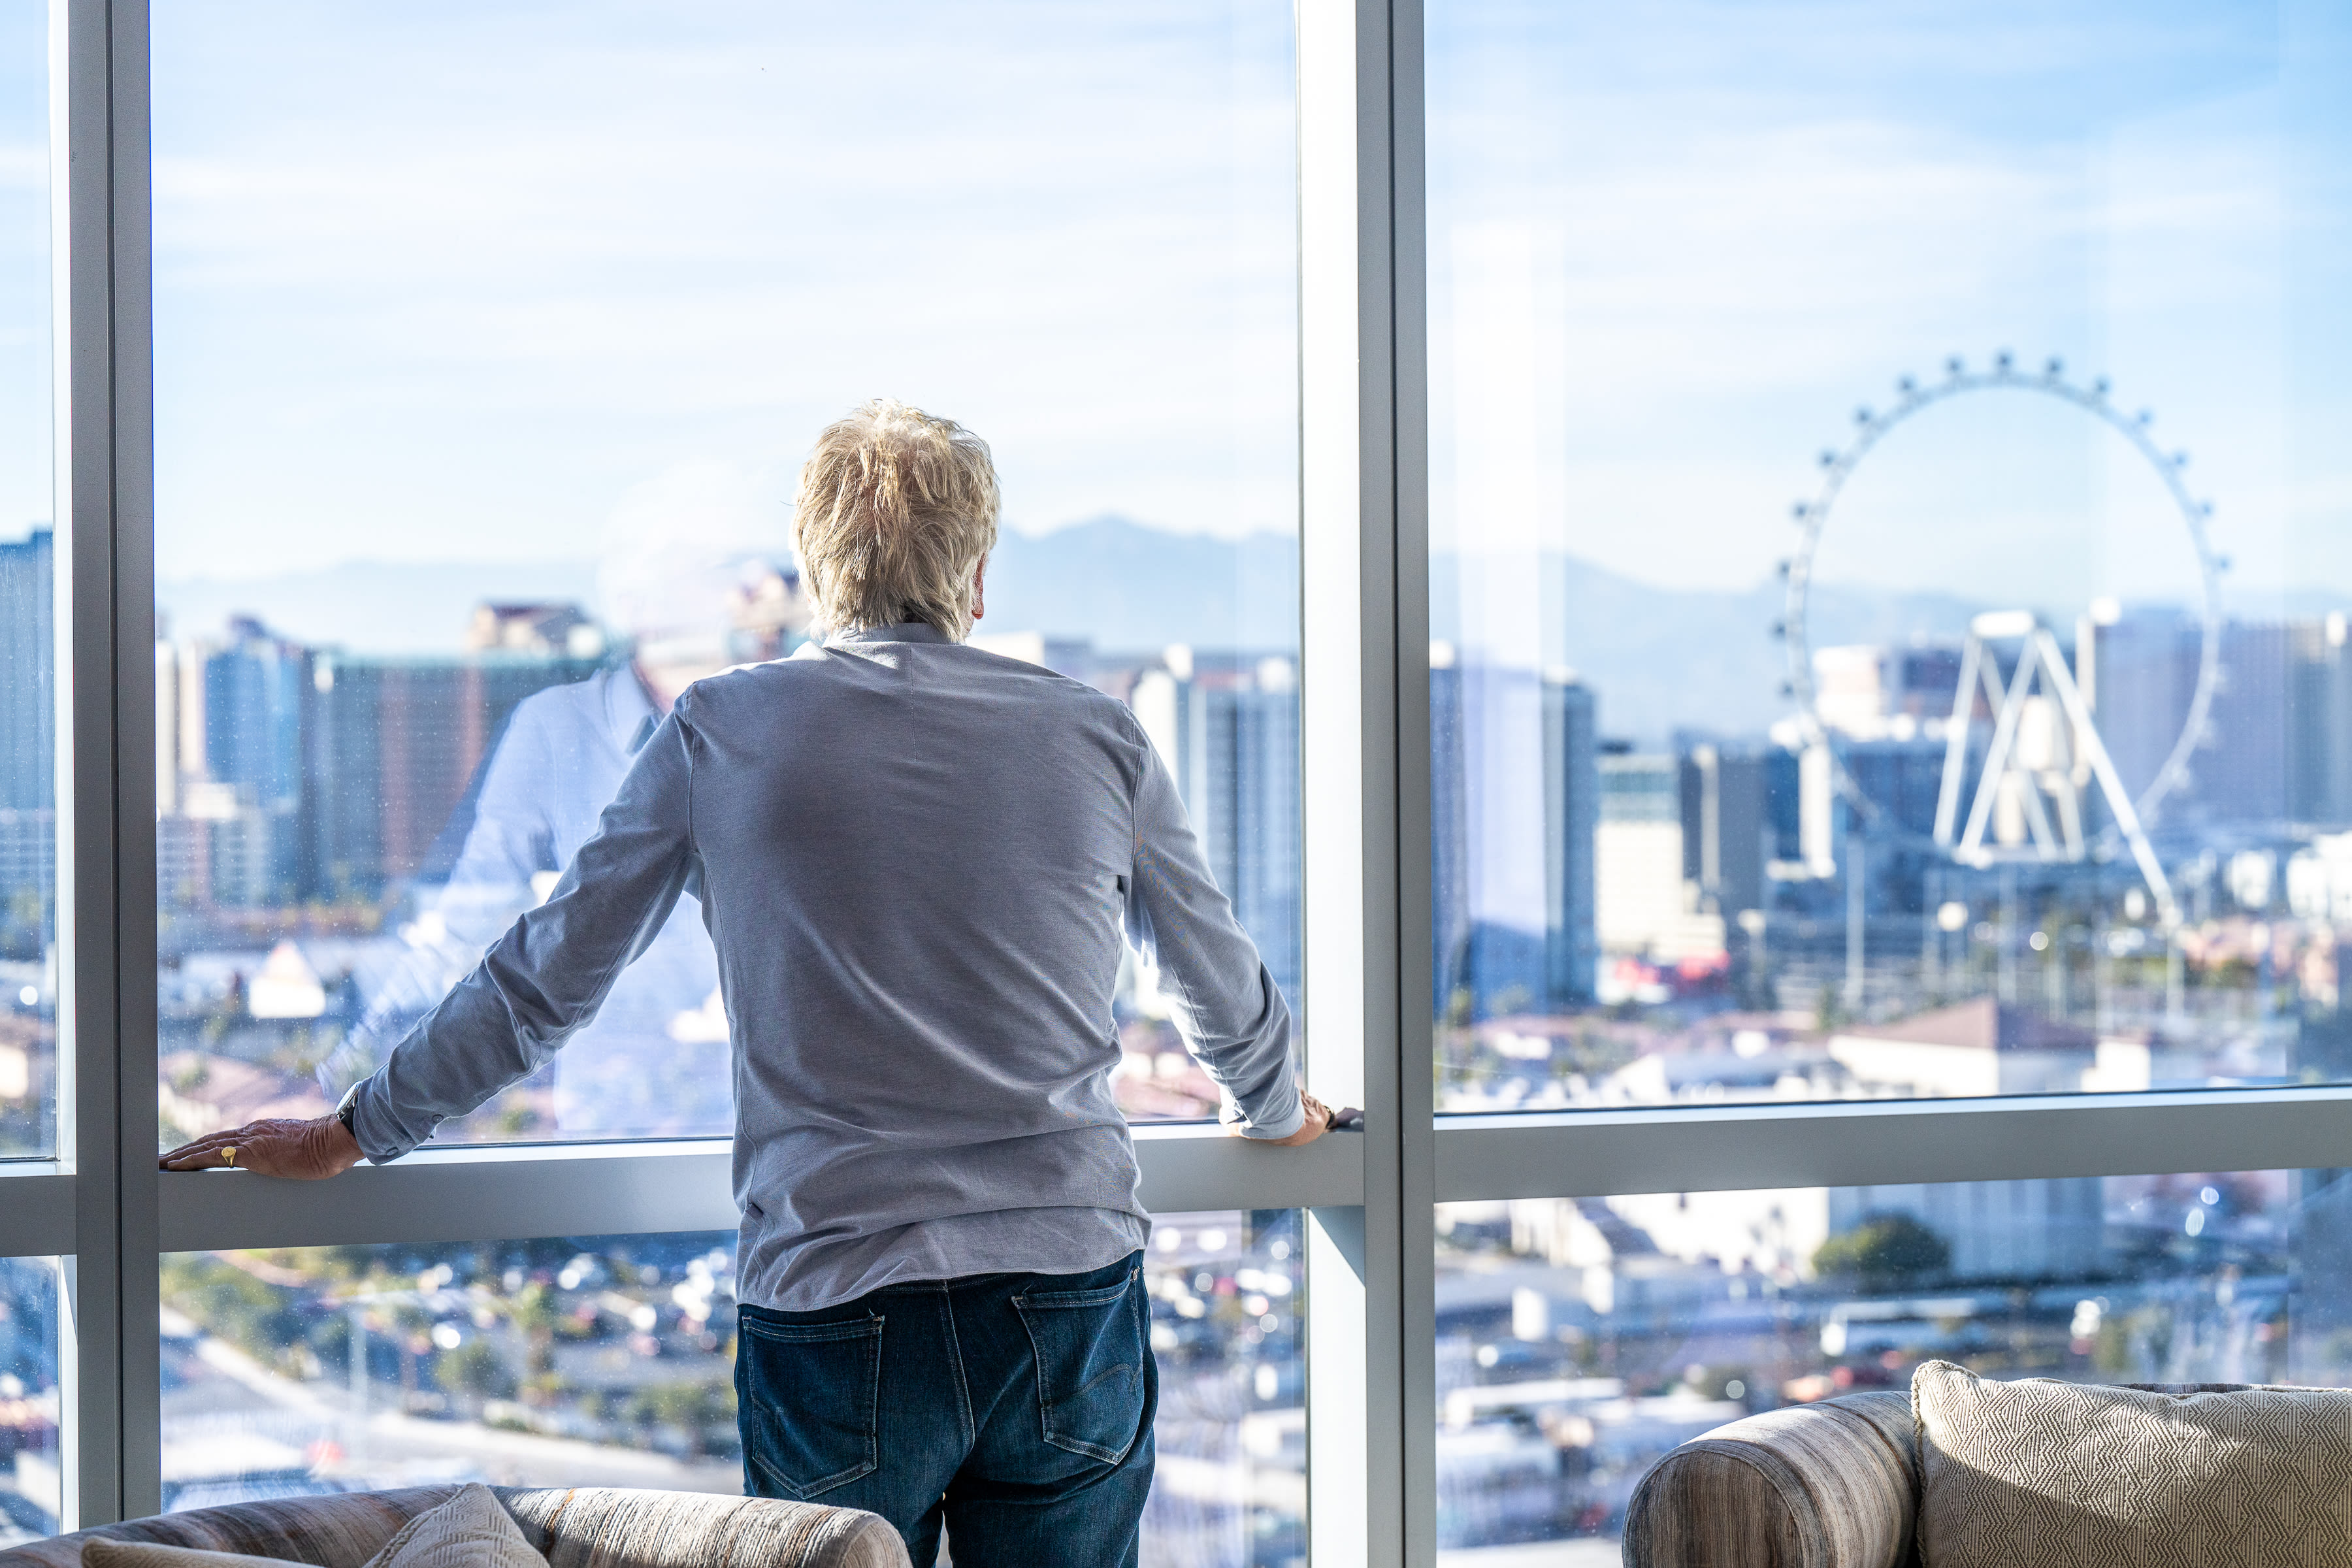 Richard Branson at Virgin Hotels Las Vegas, looking at the view